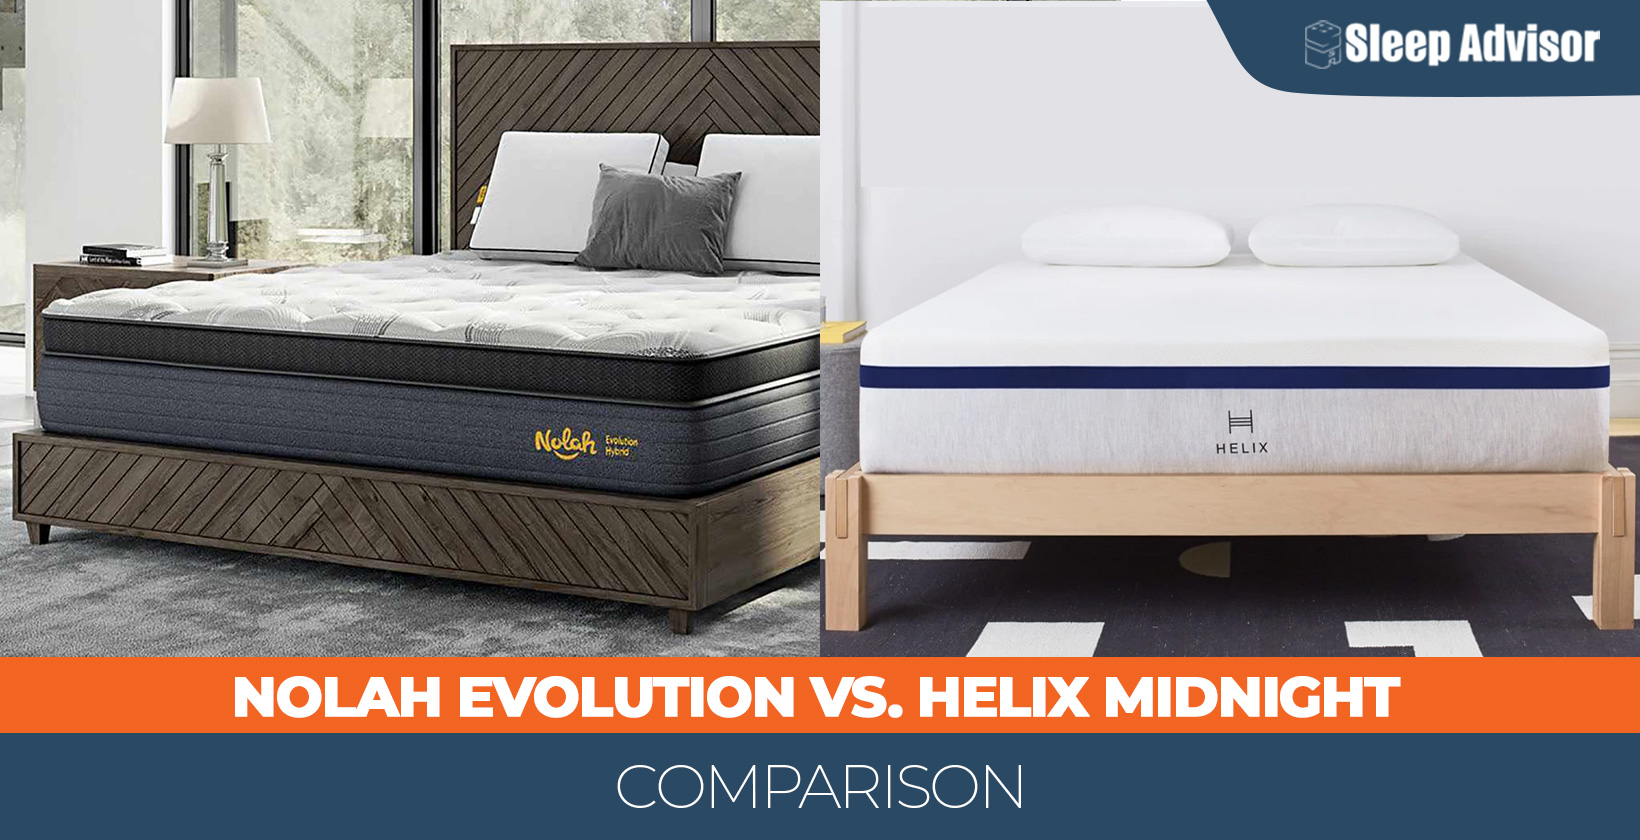 Comparison of Nolah Evolution 15 versus Helix Midnight mattress